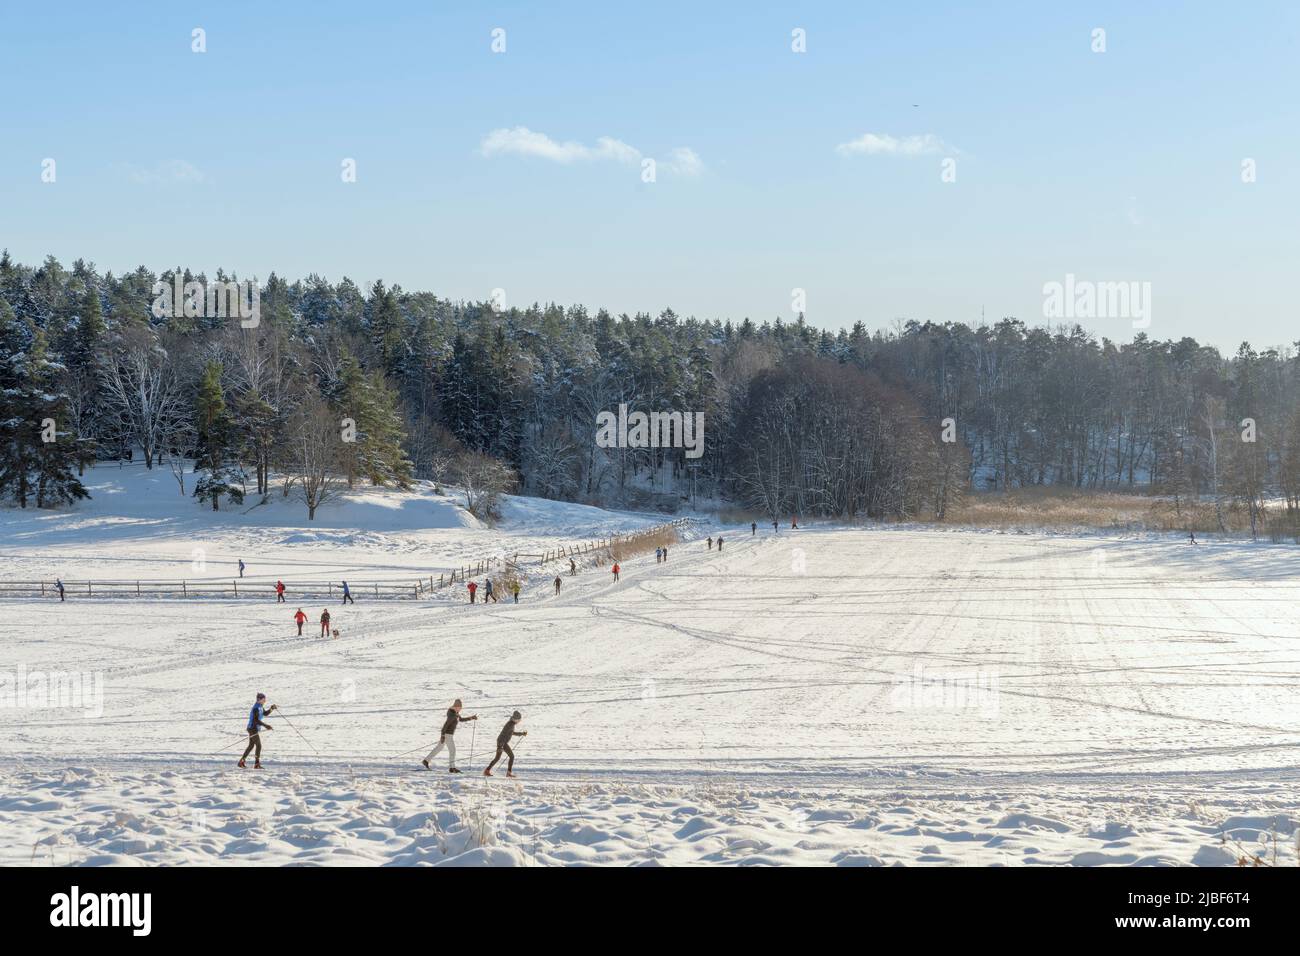 People skiing in field Stock Photo